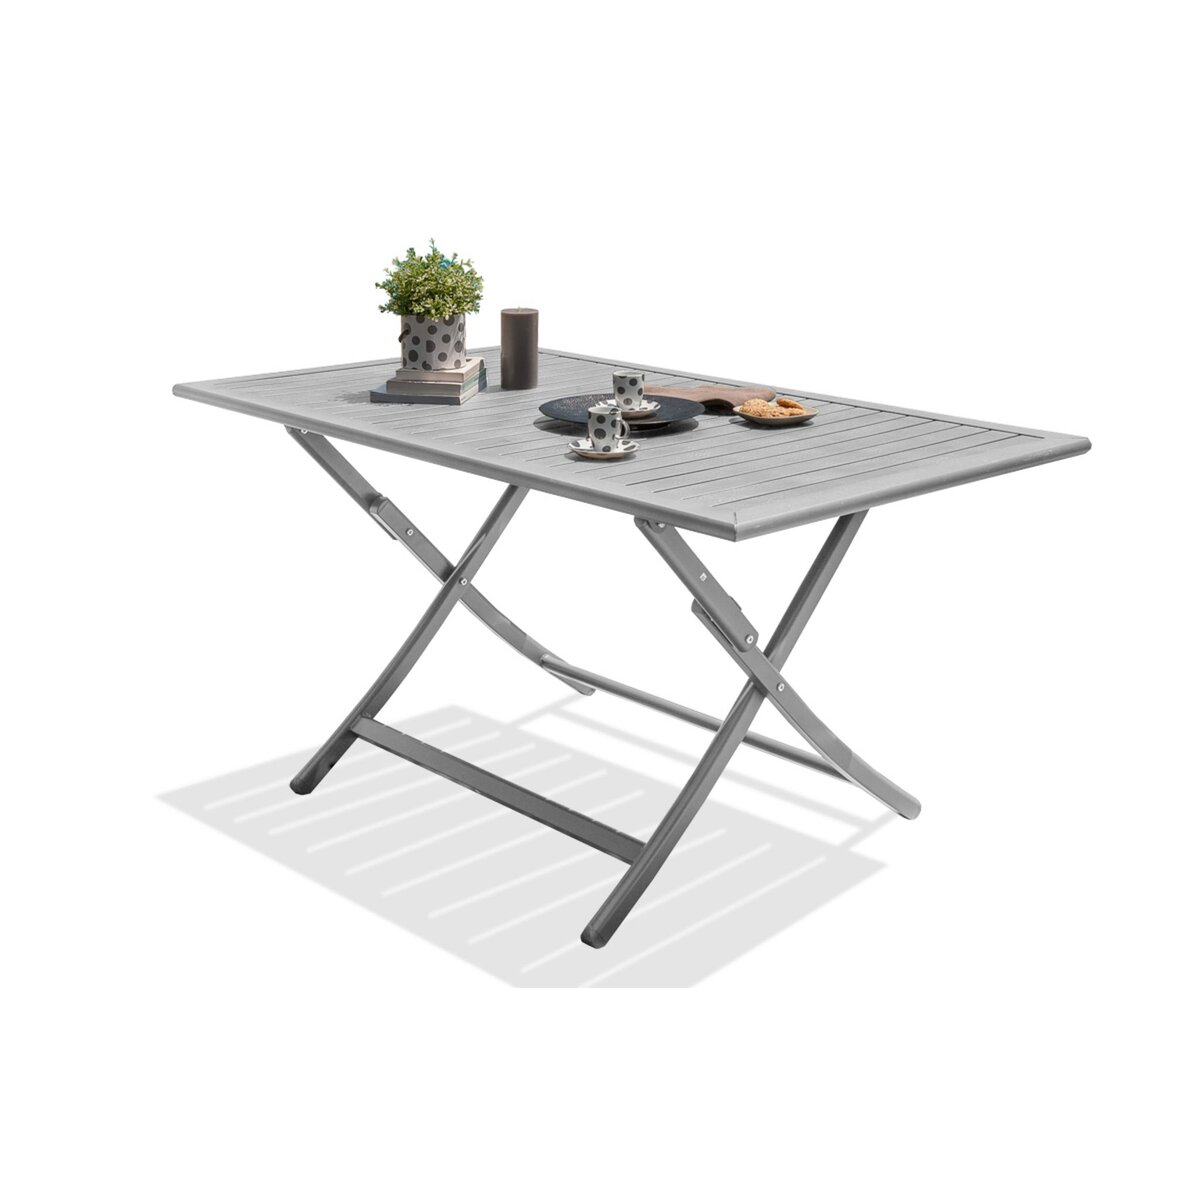 DCB GARDEN Table de jardin pliante 140x80cm aluminium gris métal MARIUS